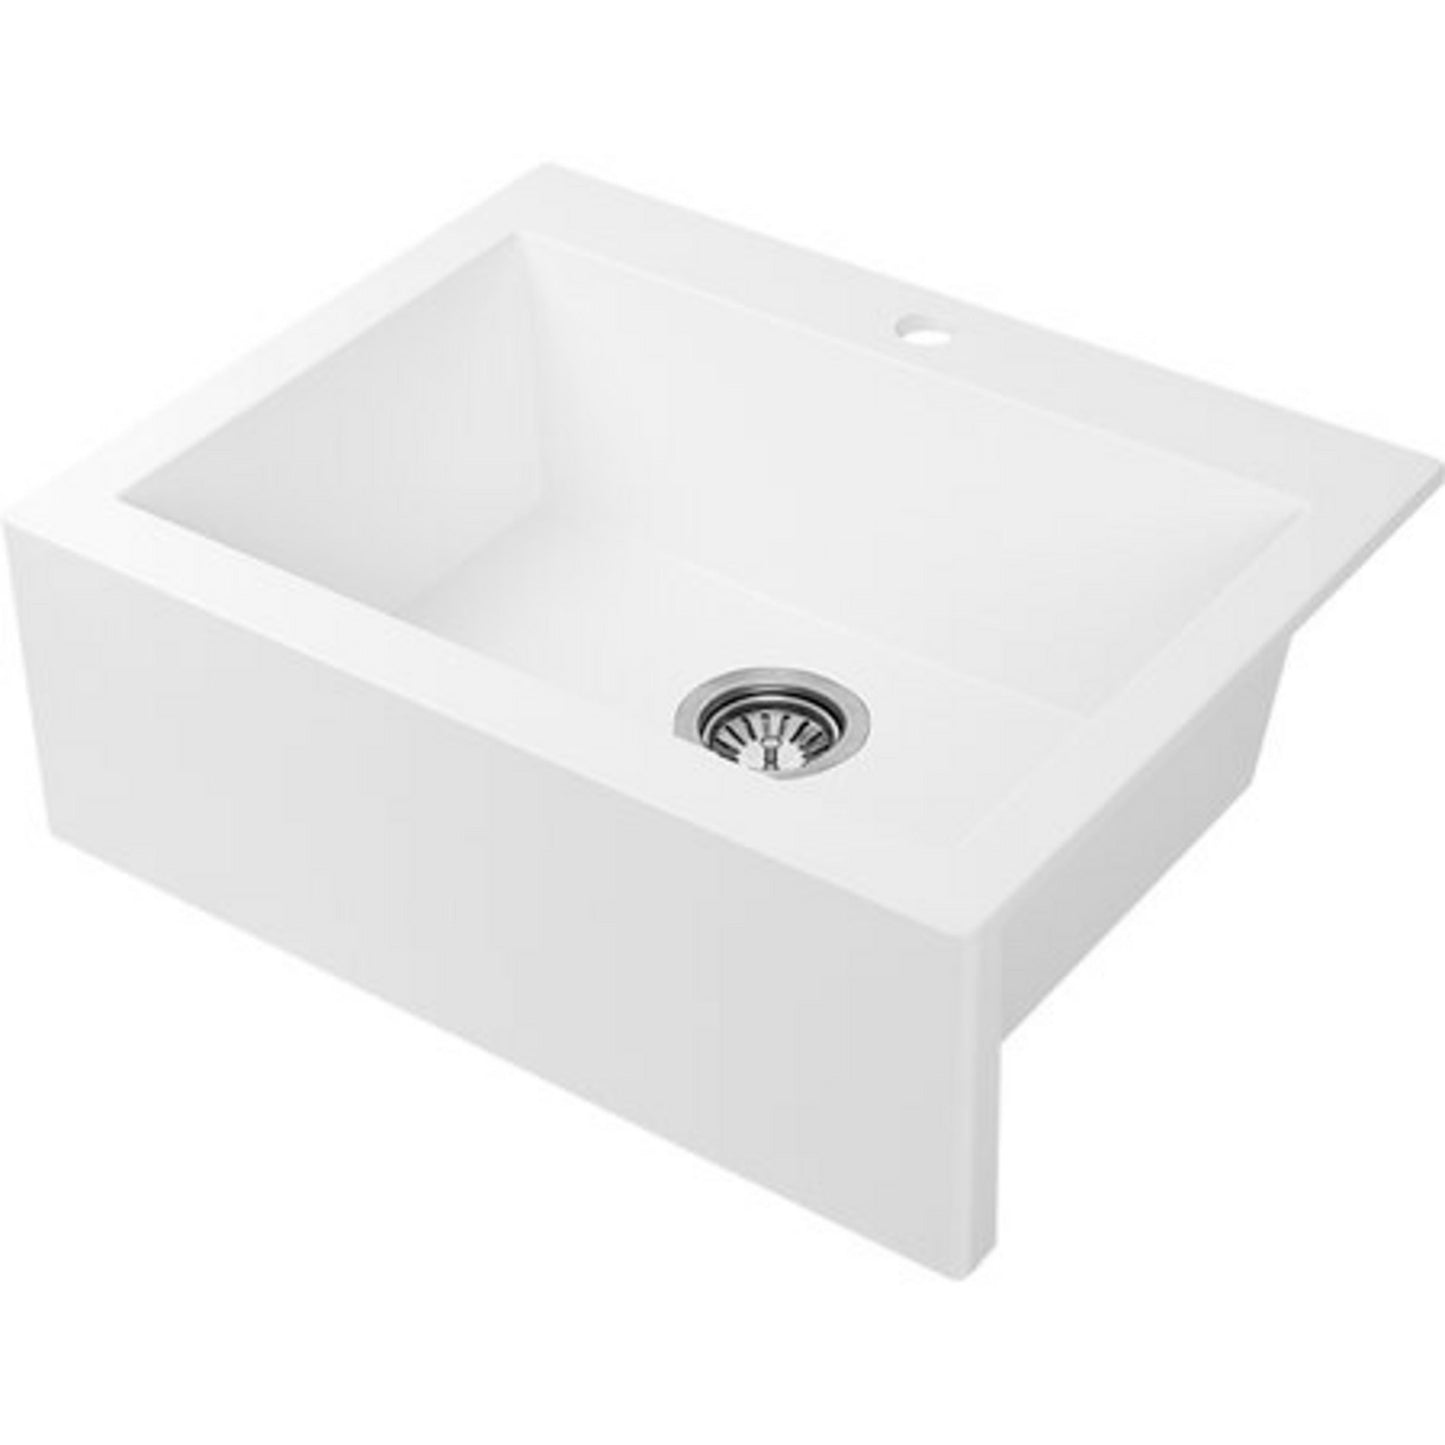 Laveo Komodo Granite Sink 1 Bowl - White